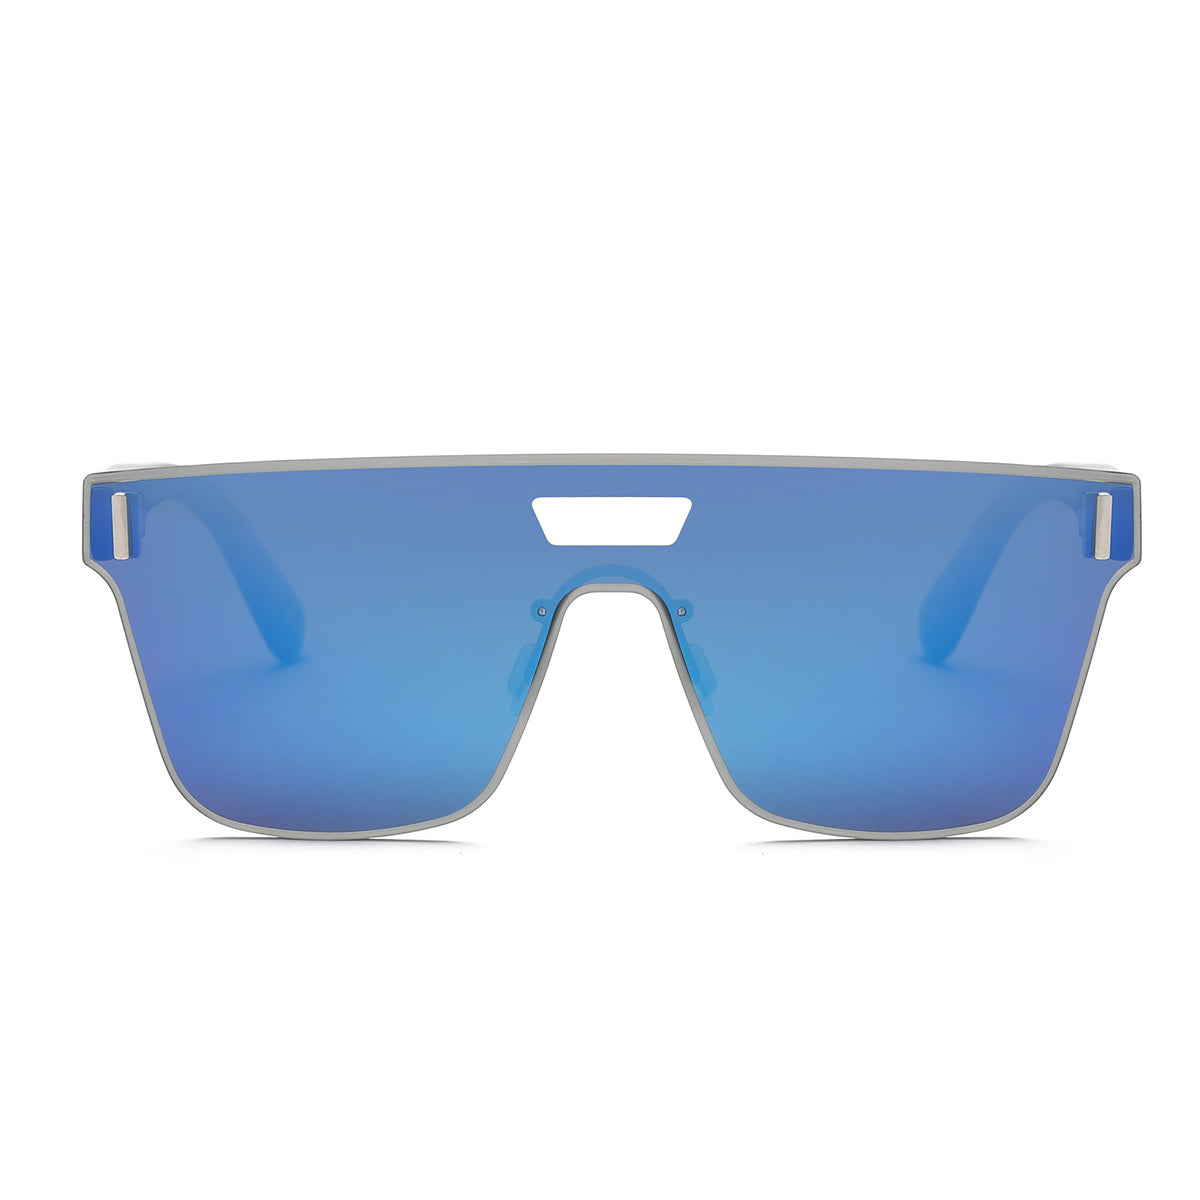 Square Mirrored Sunglasses - iBESTEST.com